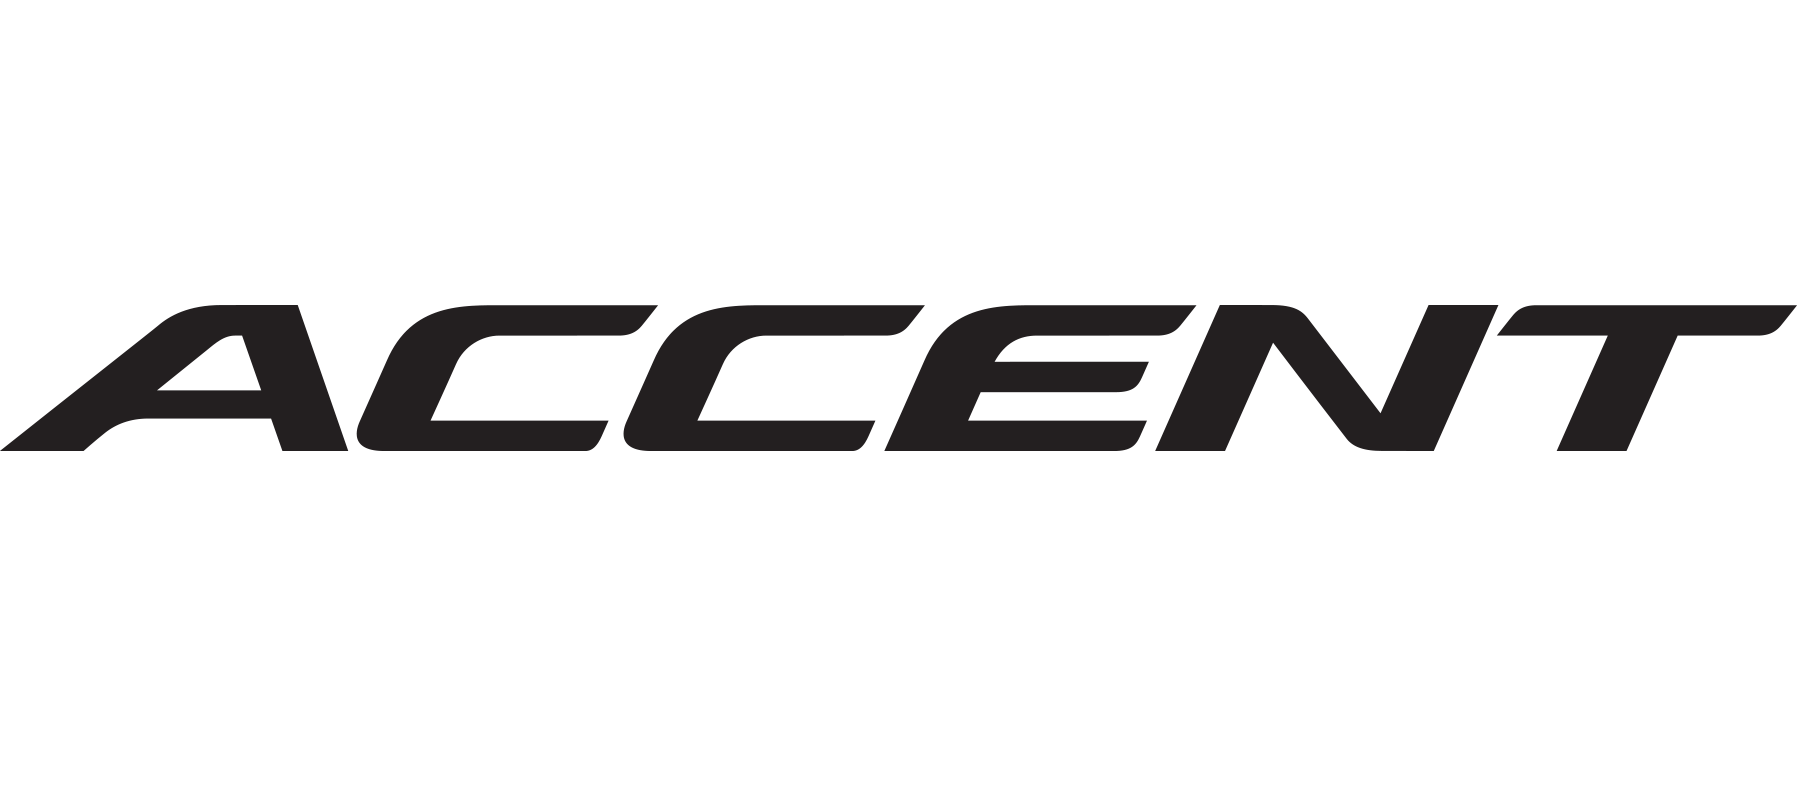 accent_vehicle_badge